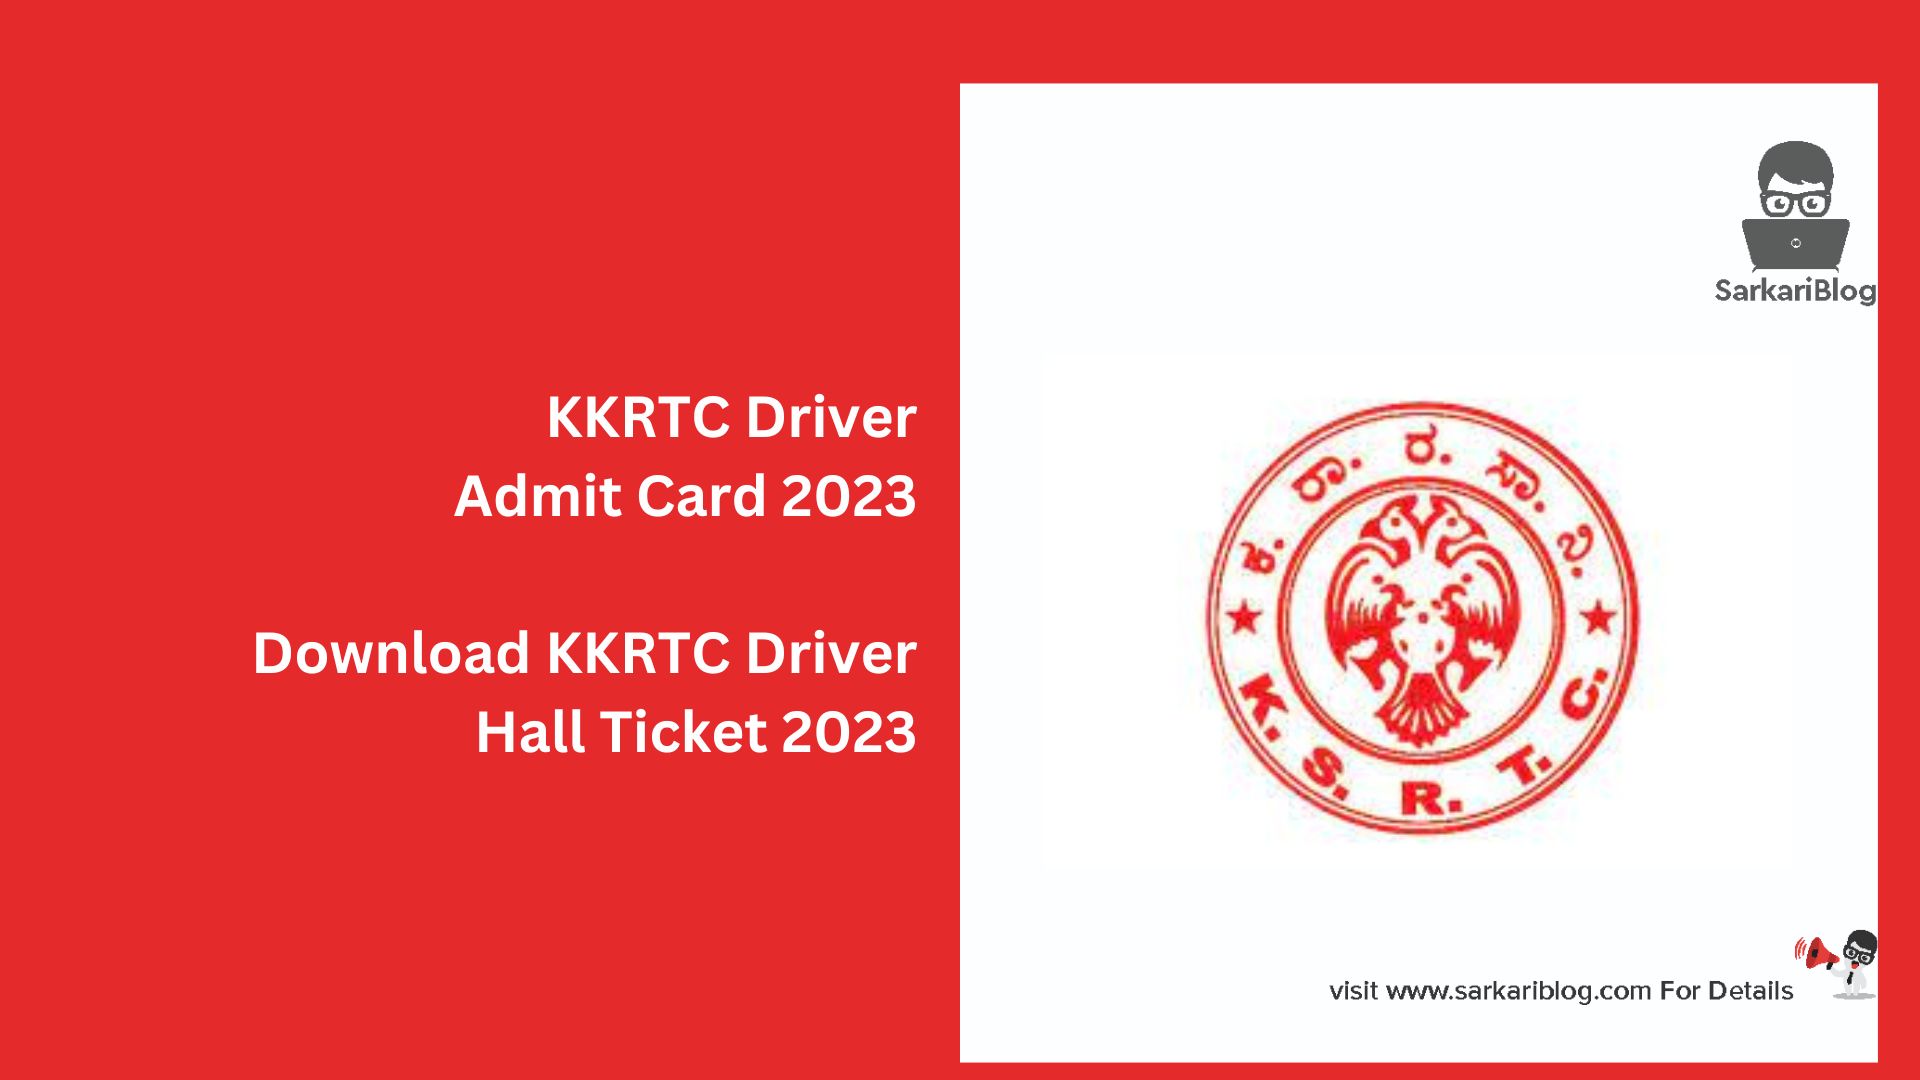 KKRTC Driver Admit Card 2023